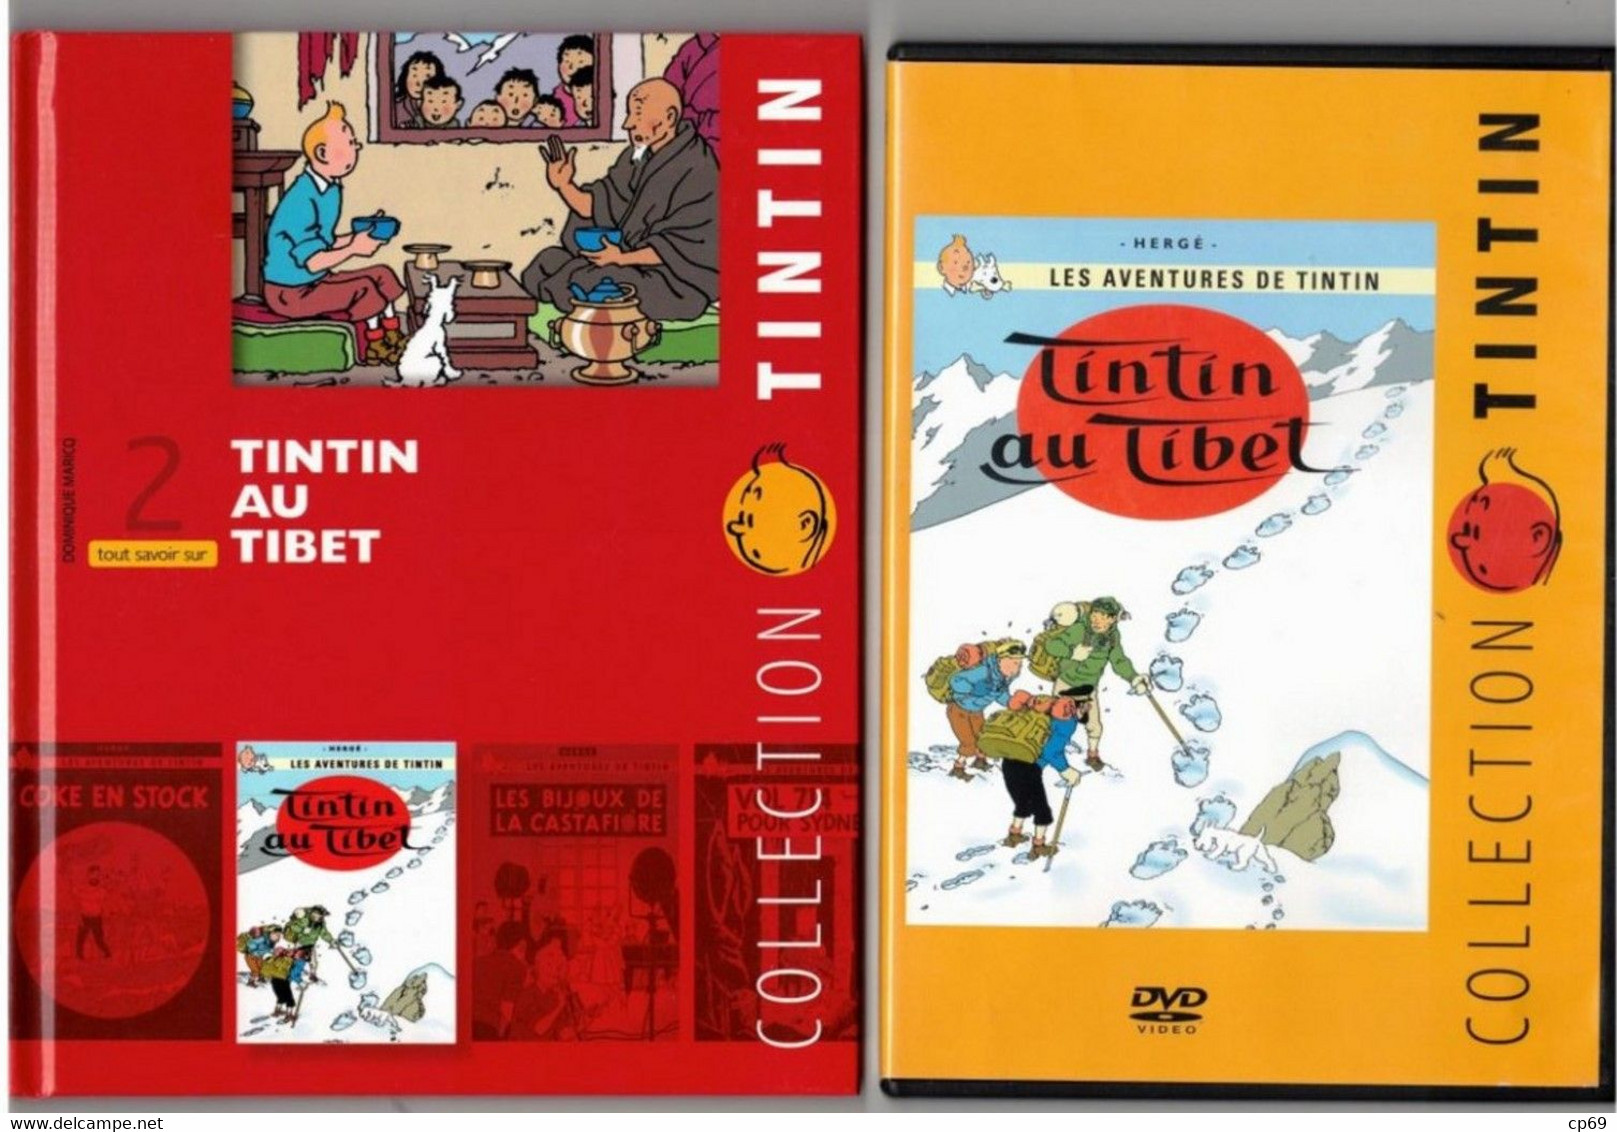 Tintin Hergé / Moulinsart 2010 Milou Chien Dog Cane Tintin Au Tibet Capitaine Haddock N°2 DVD + Livret Explicatif B.Etat - Animation